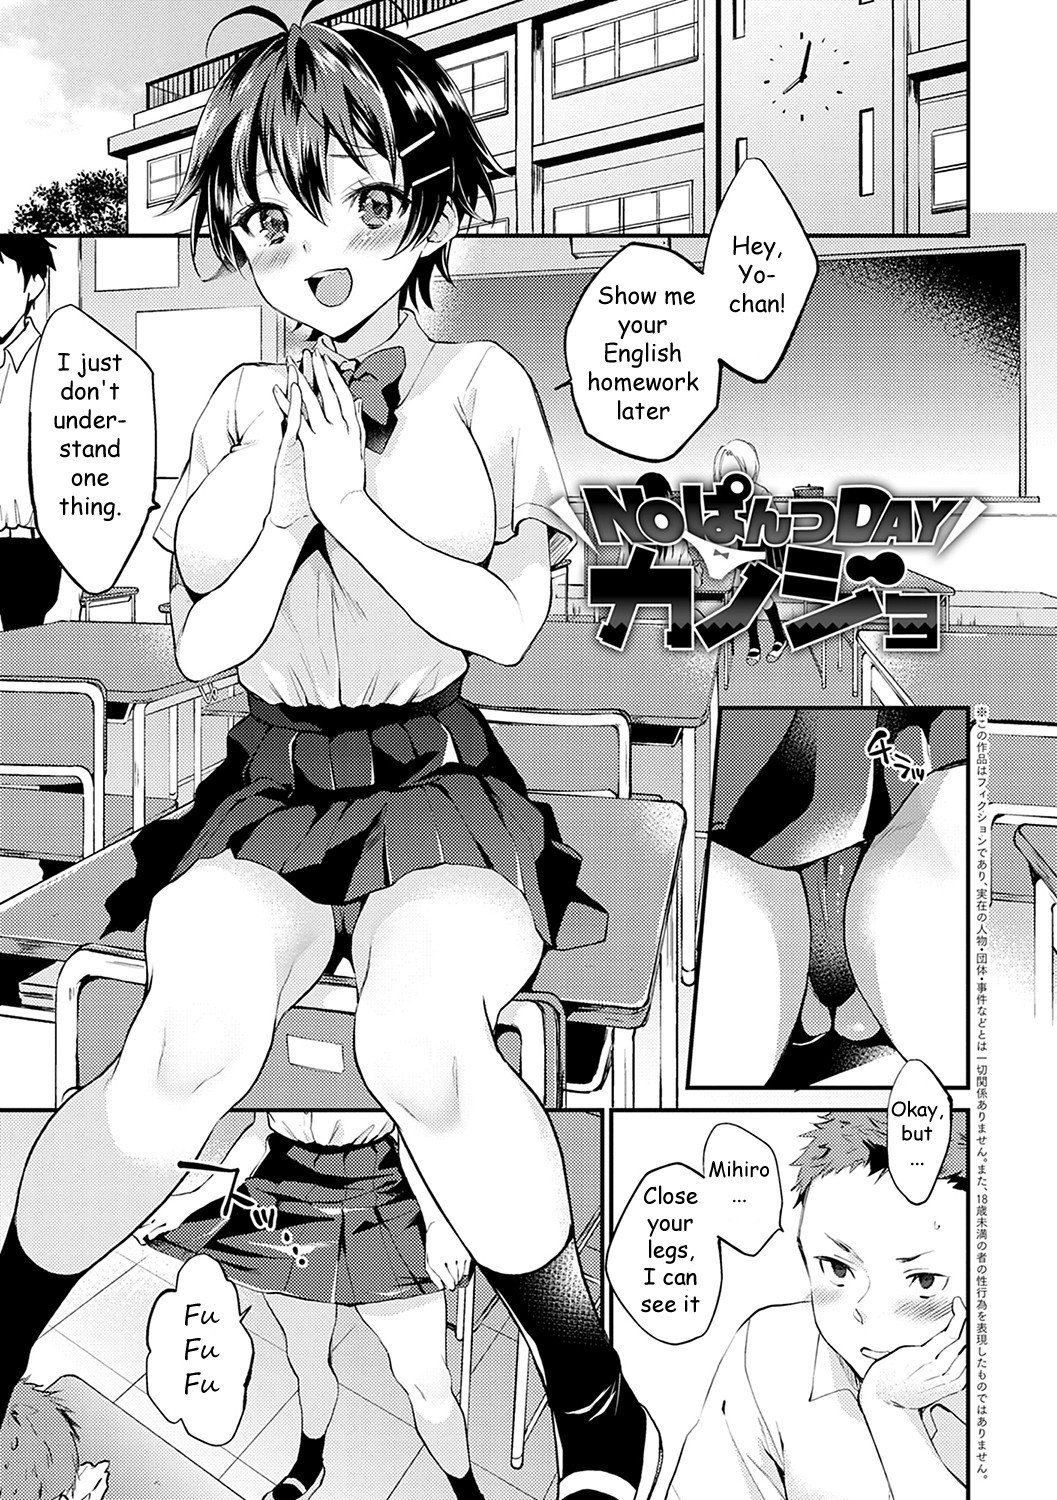 Hentai Manga Comic-No Pants Day Girlfriend-Read-1